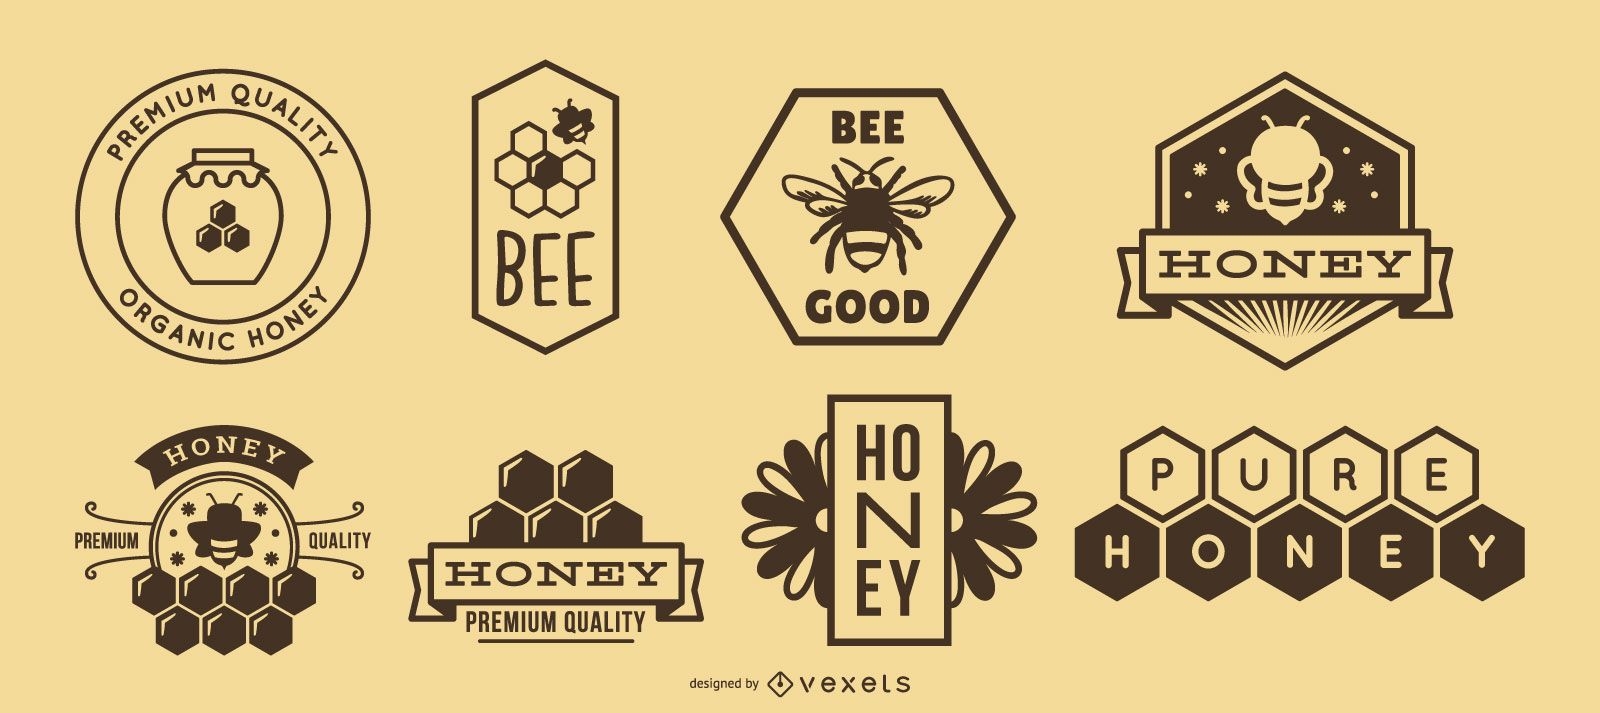 Honey Logo Projects :: Photos, videos, logos, illustrations and branding ::  Behance